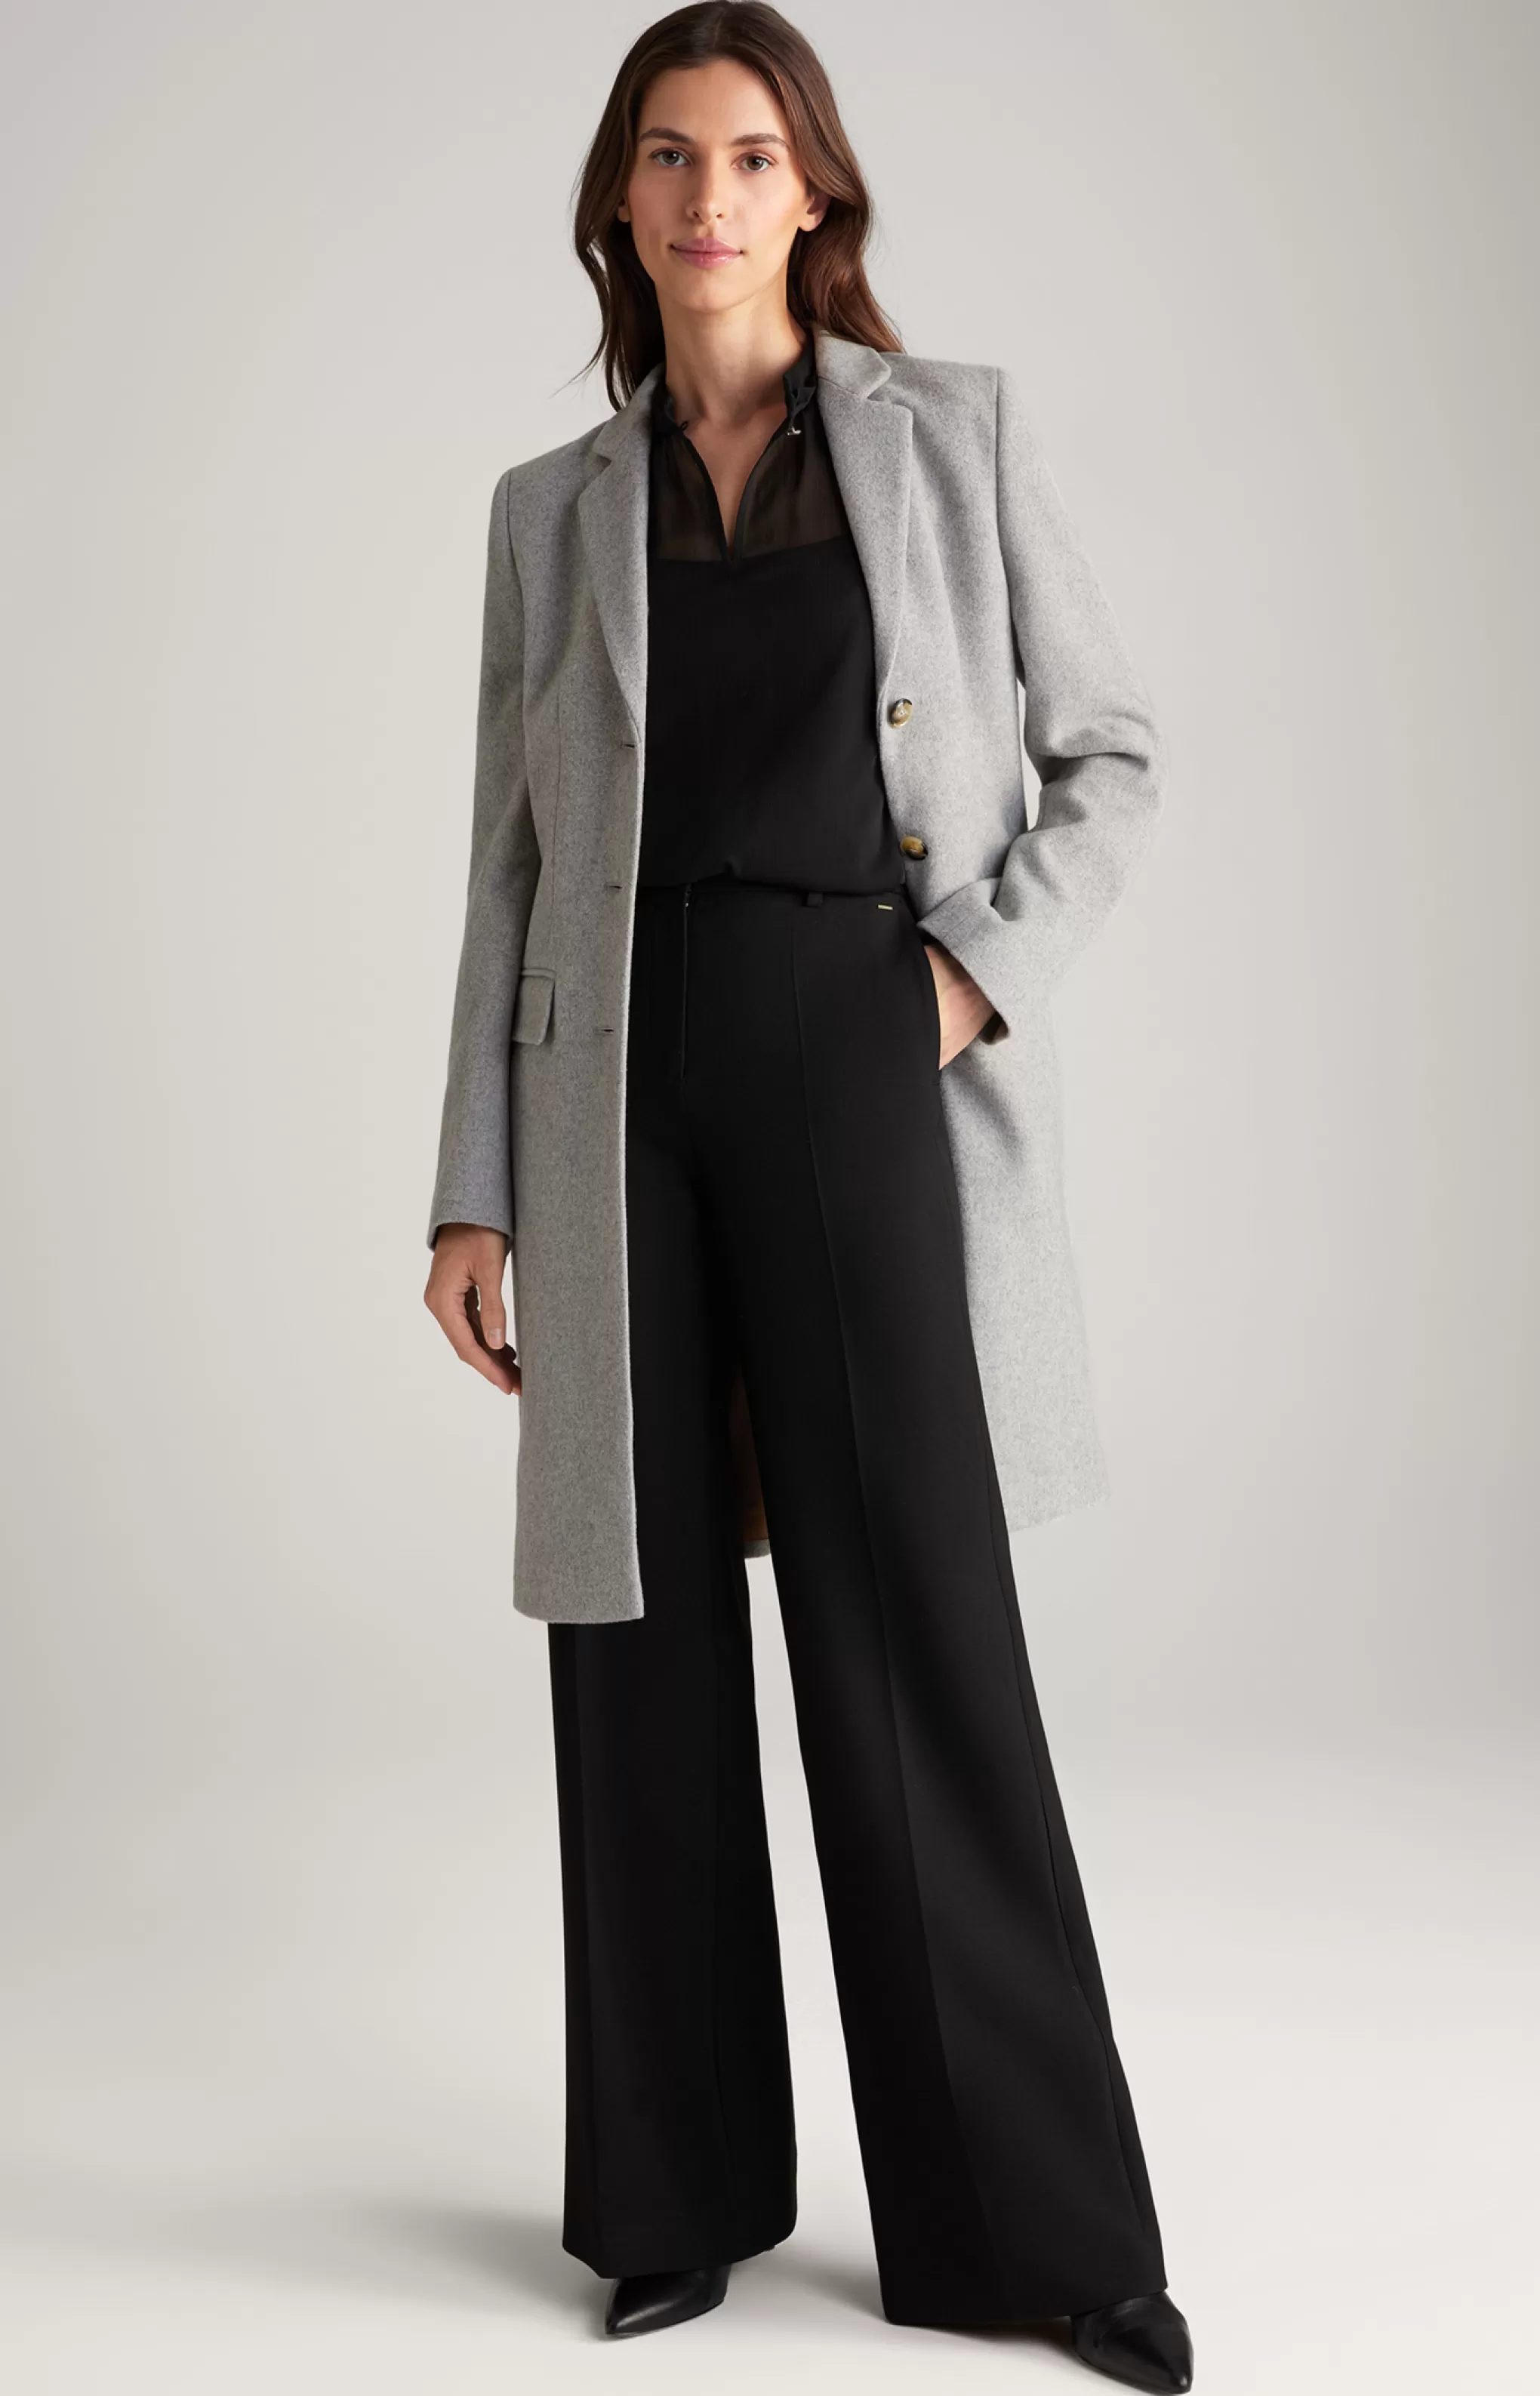 Jackets And Coats | Clothing*JOOP Jackets And Coats | Clothing Carly Coat in Grey Flecked